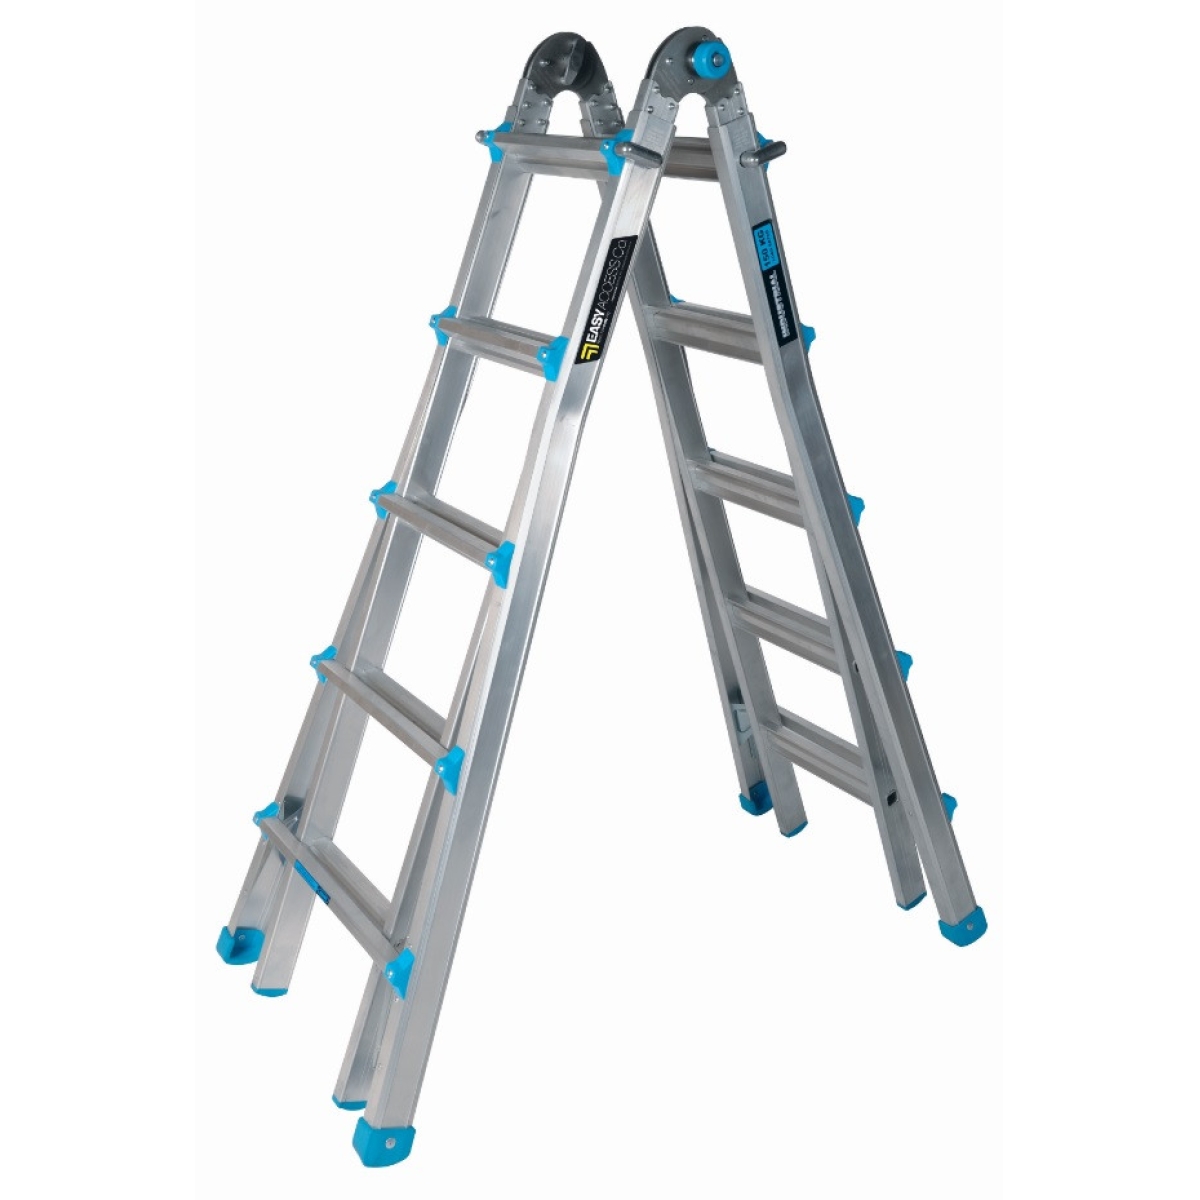 Easy Access Titan Tuff Telescopic All-in-one Ladders